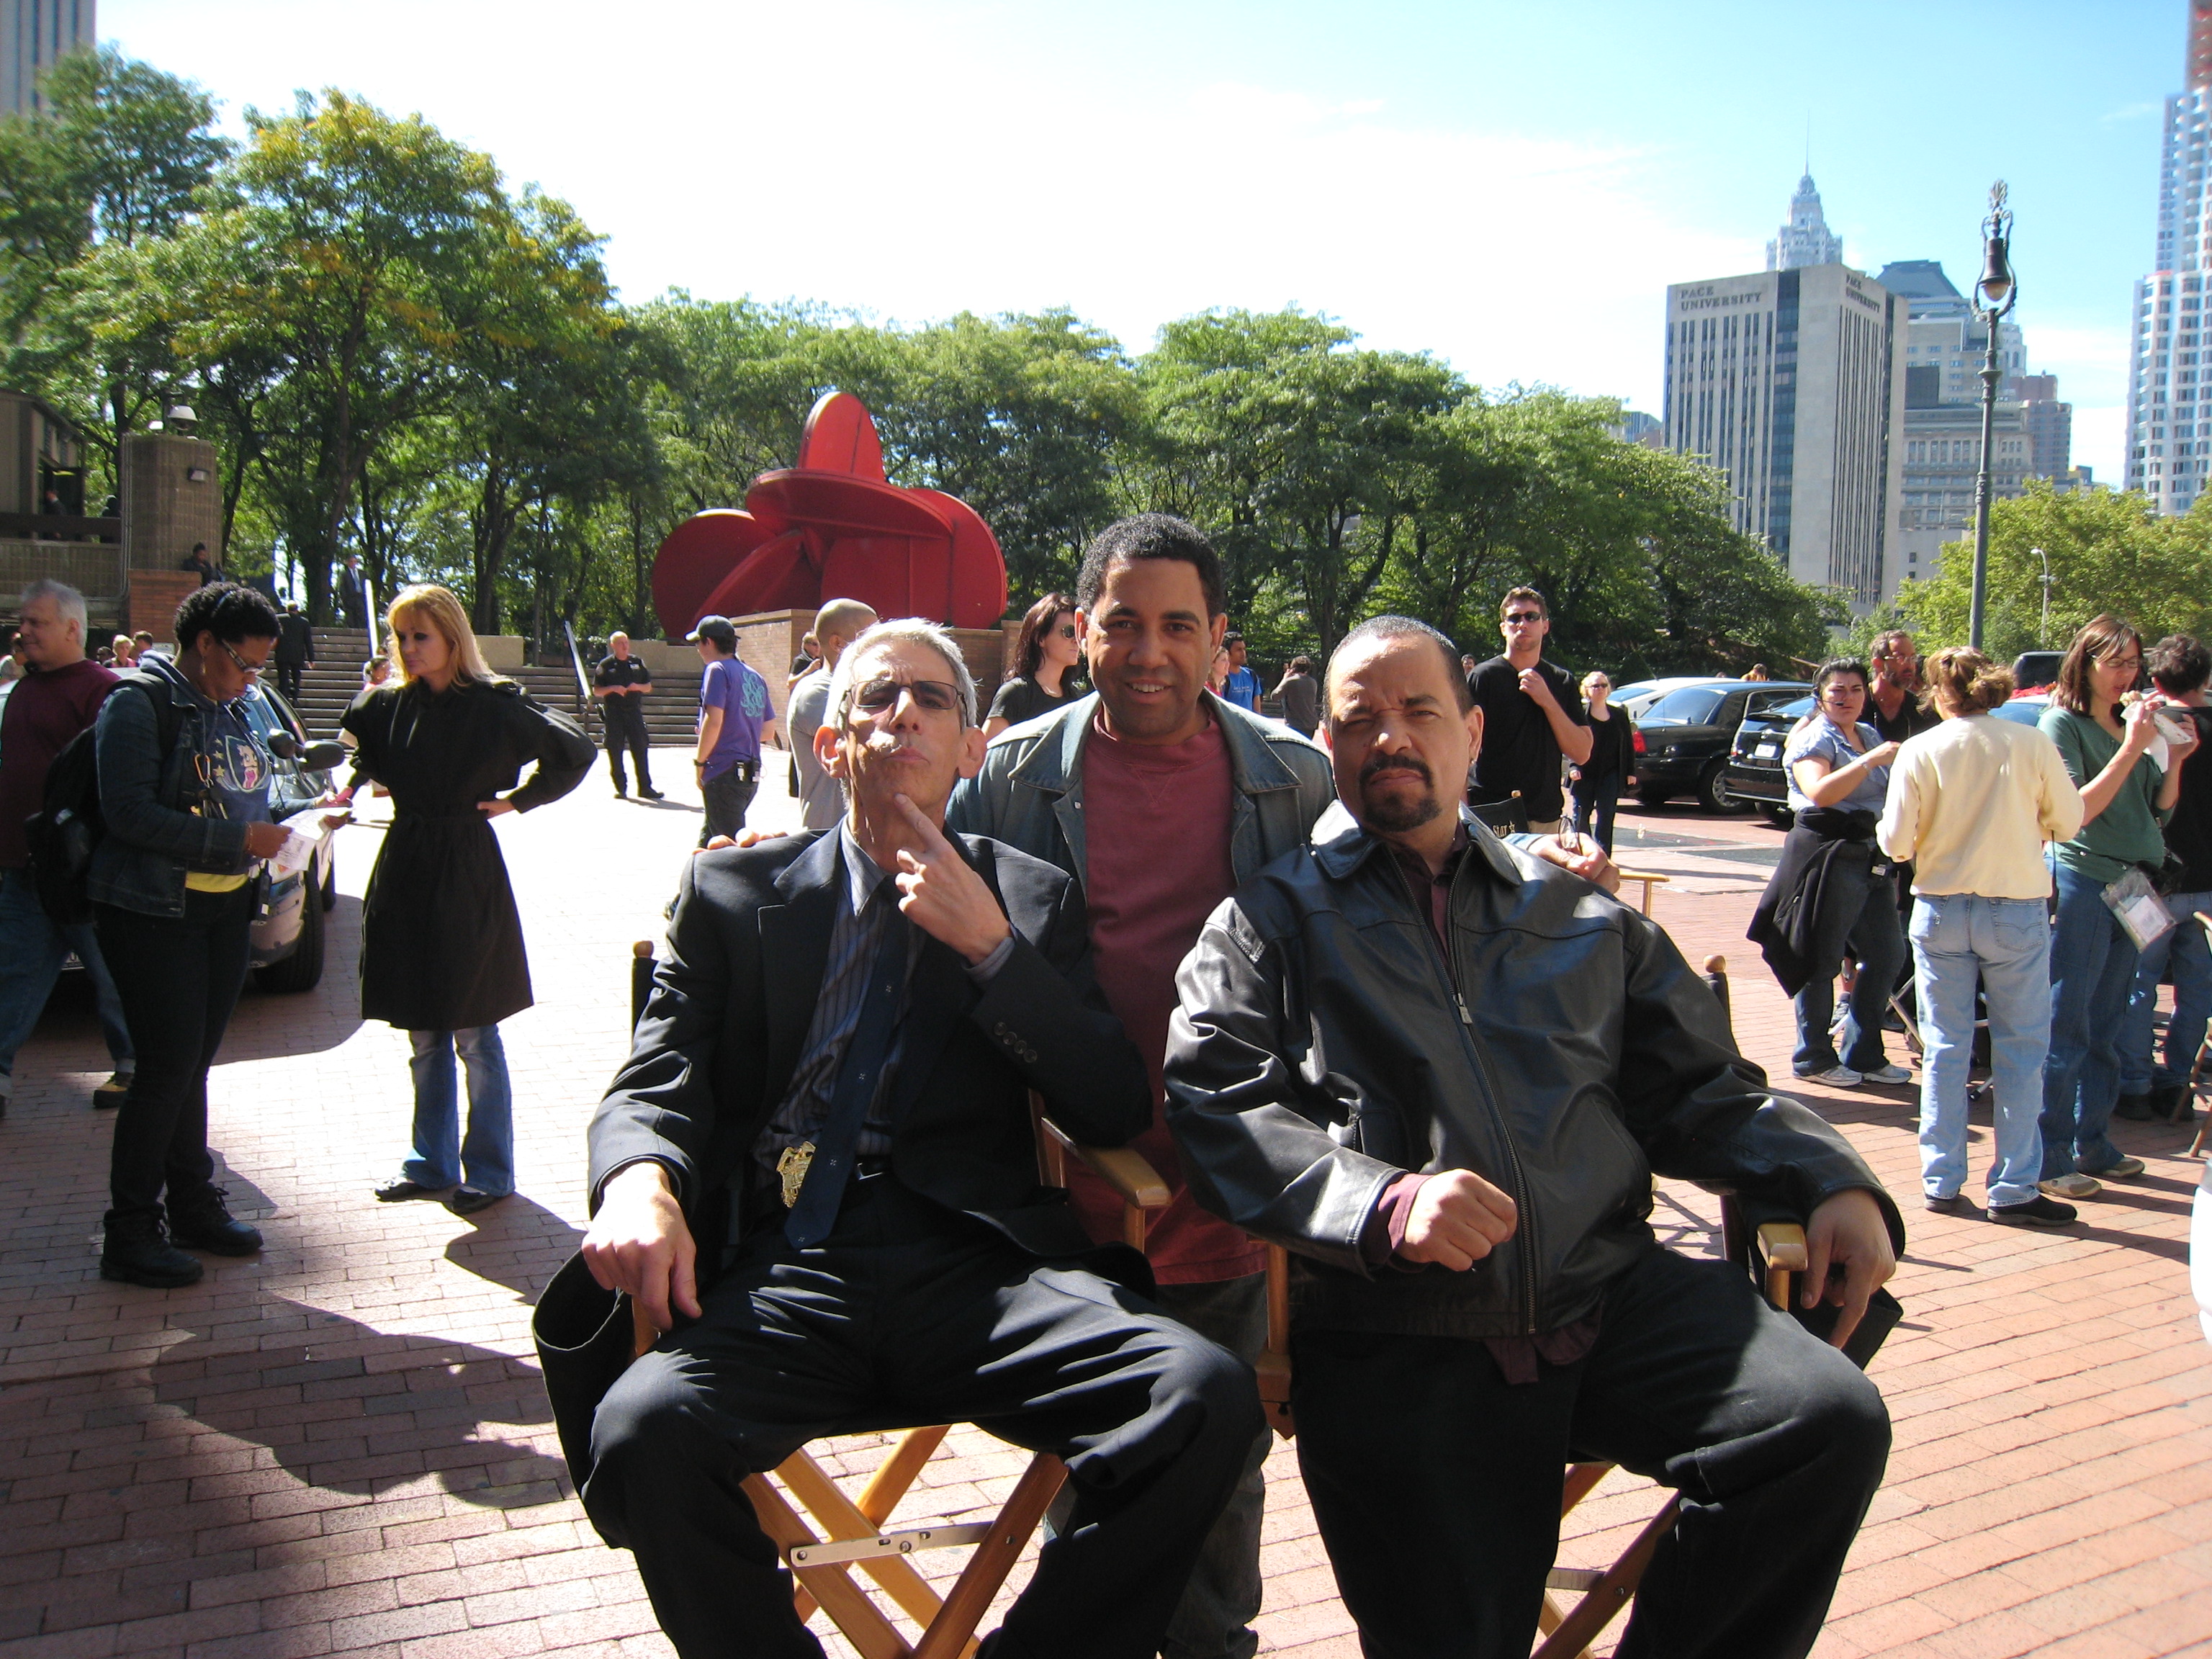 Richard Belzer, Millard Darden and Ice-T on set of Law & Order: SVU September 21, 2009